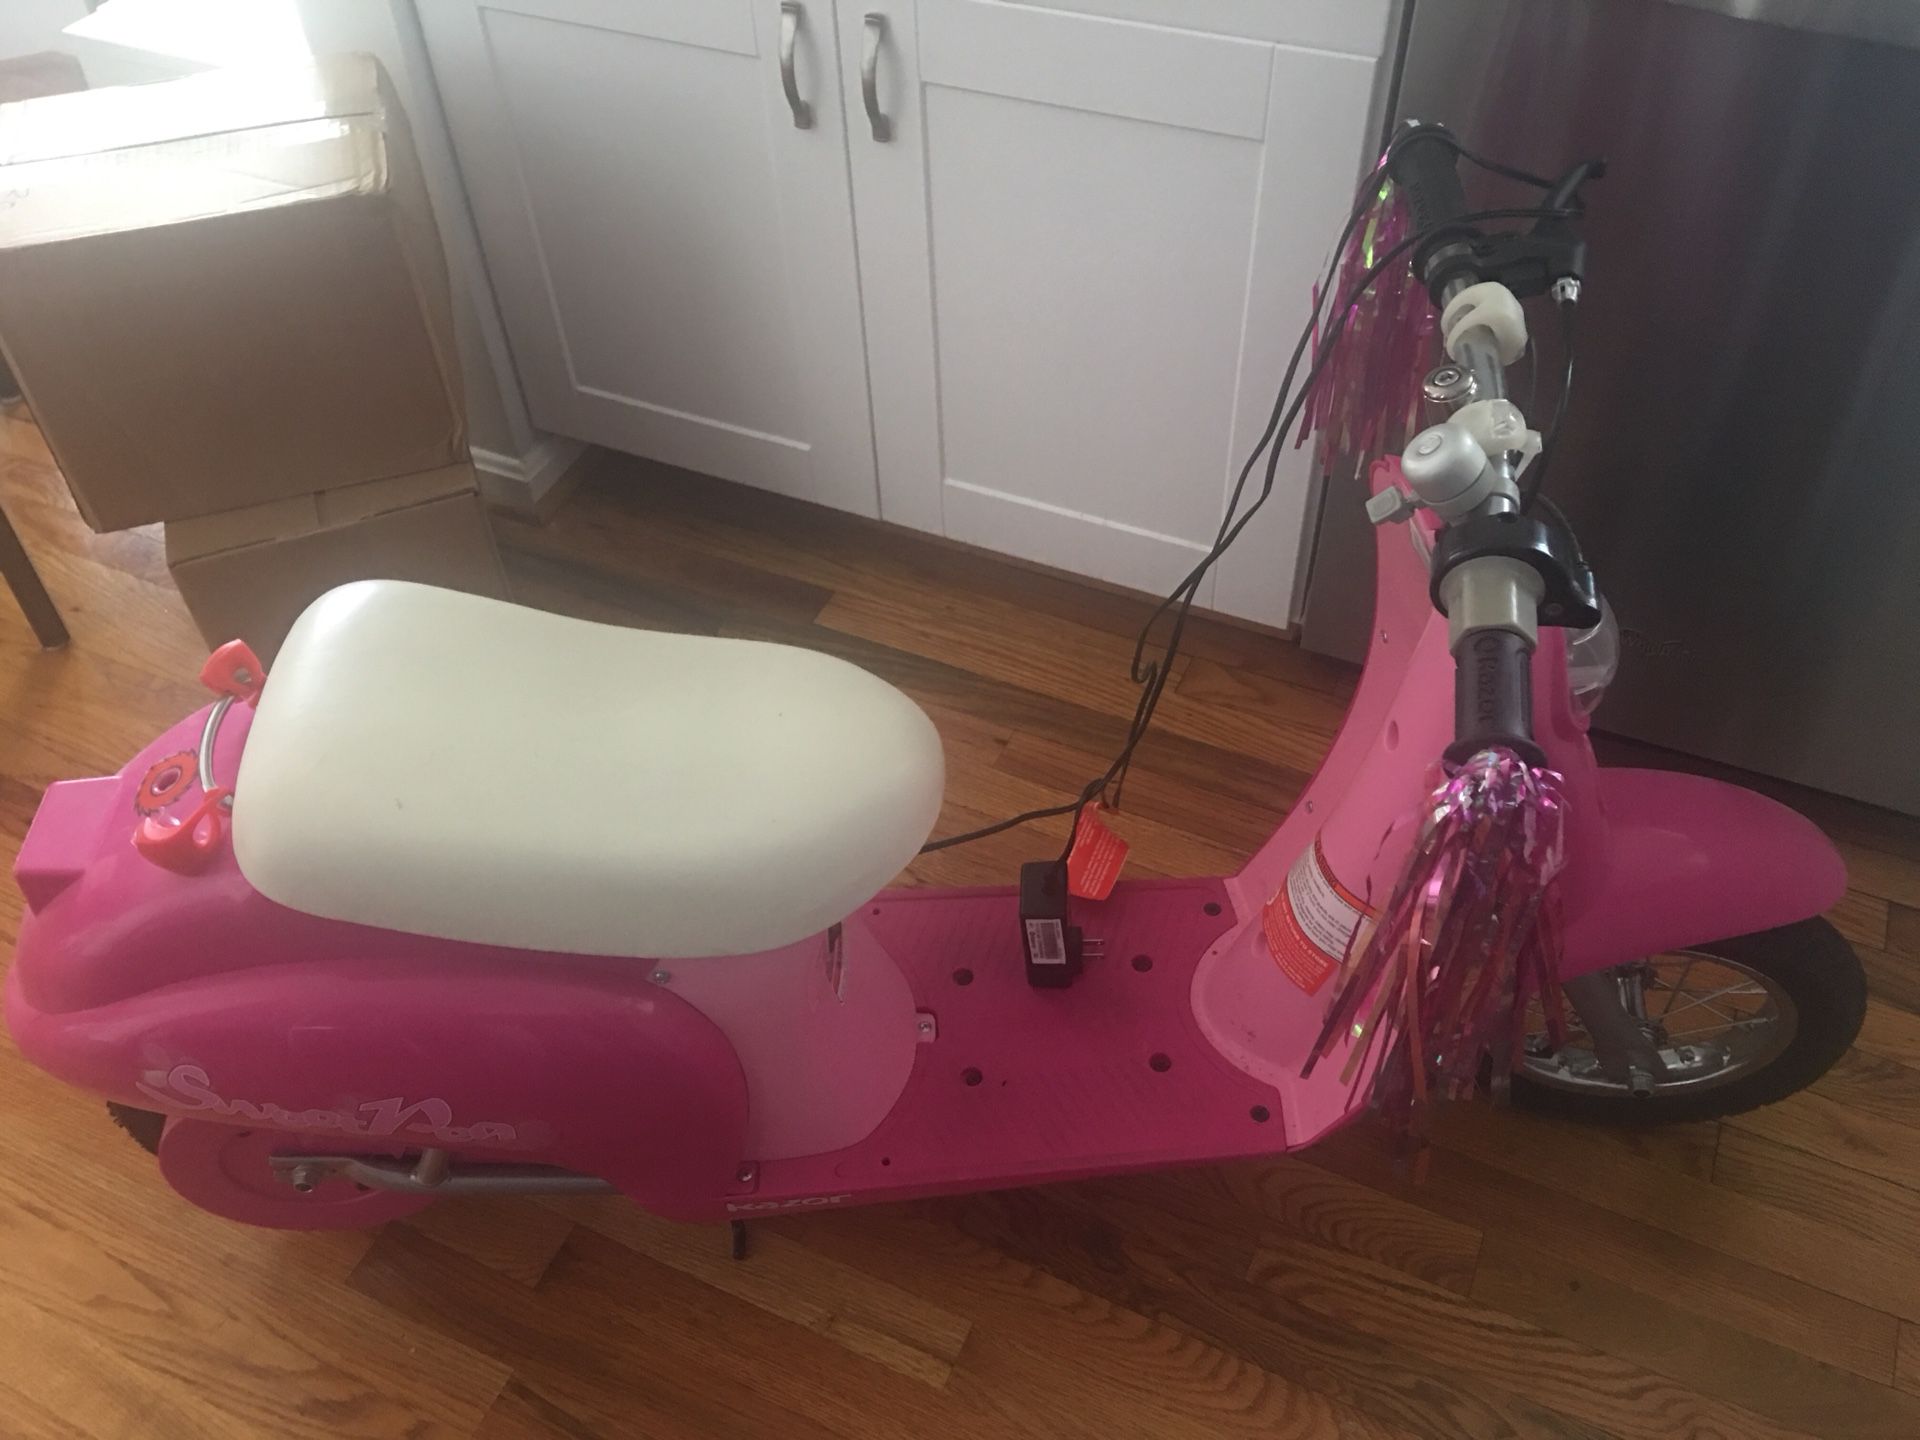 Razor Girl’s Vespa-style electric scooter